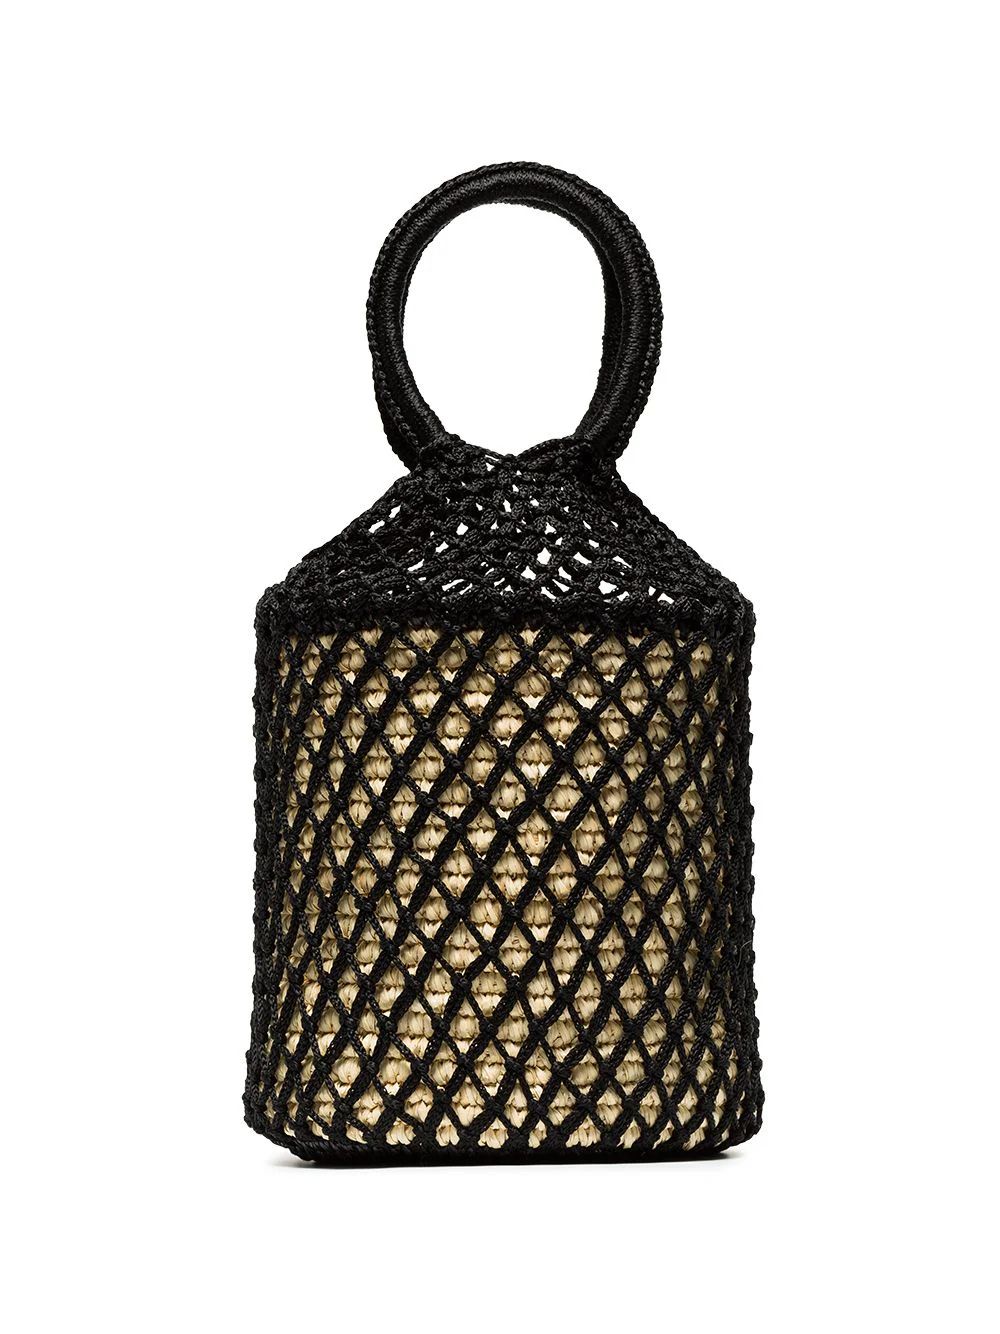 Sensi Studio Black straw and net bucket bag | FarFetch Global